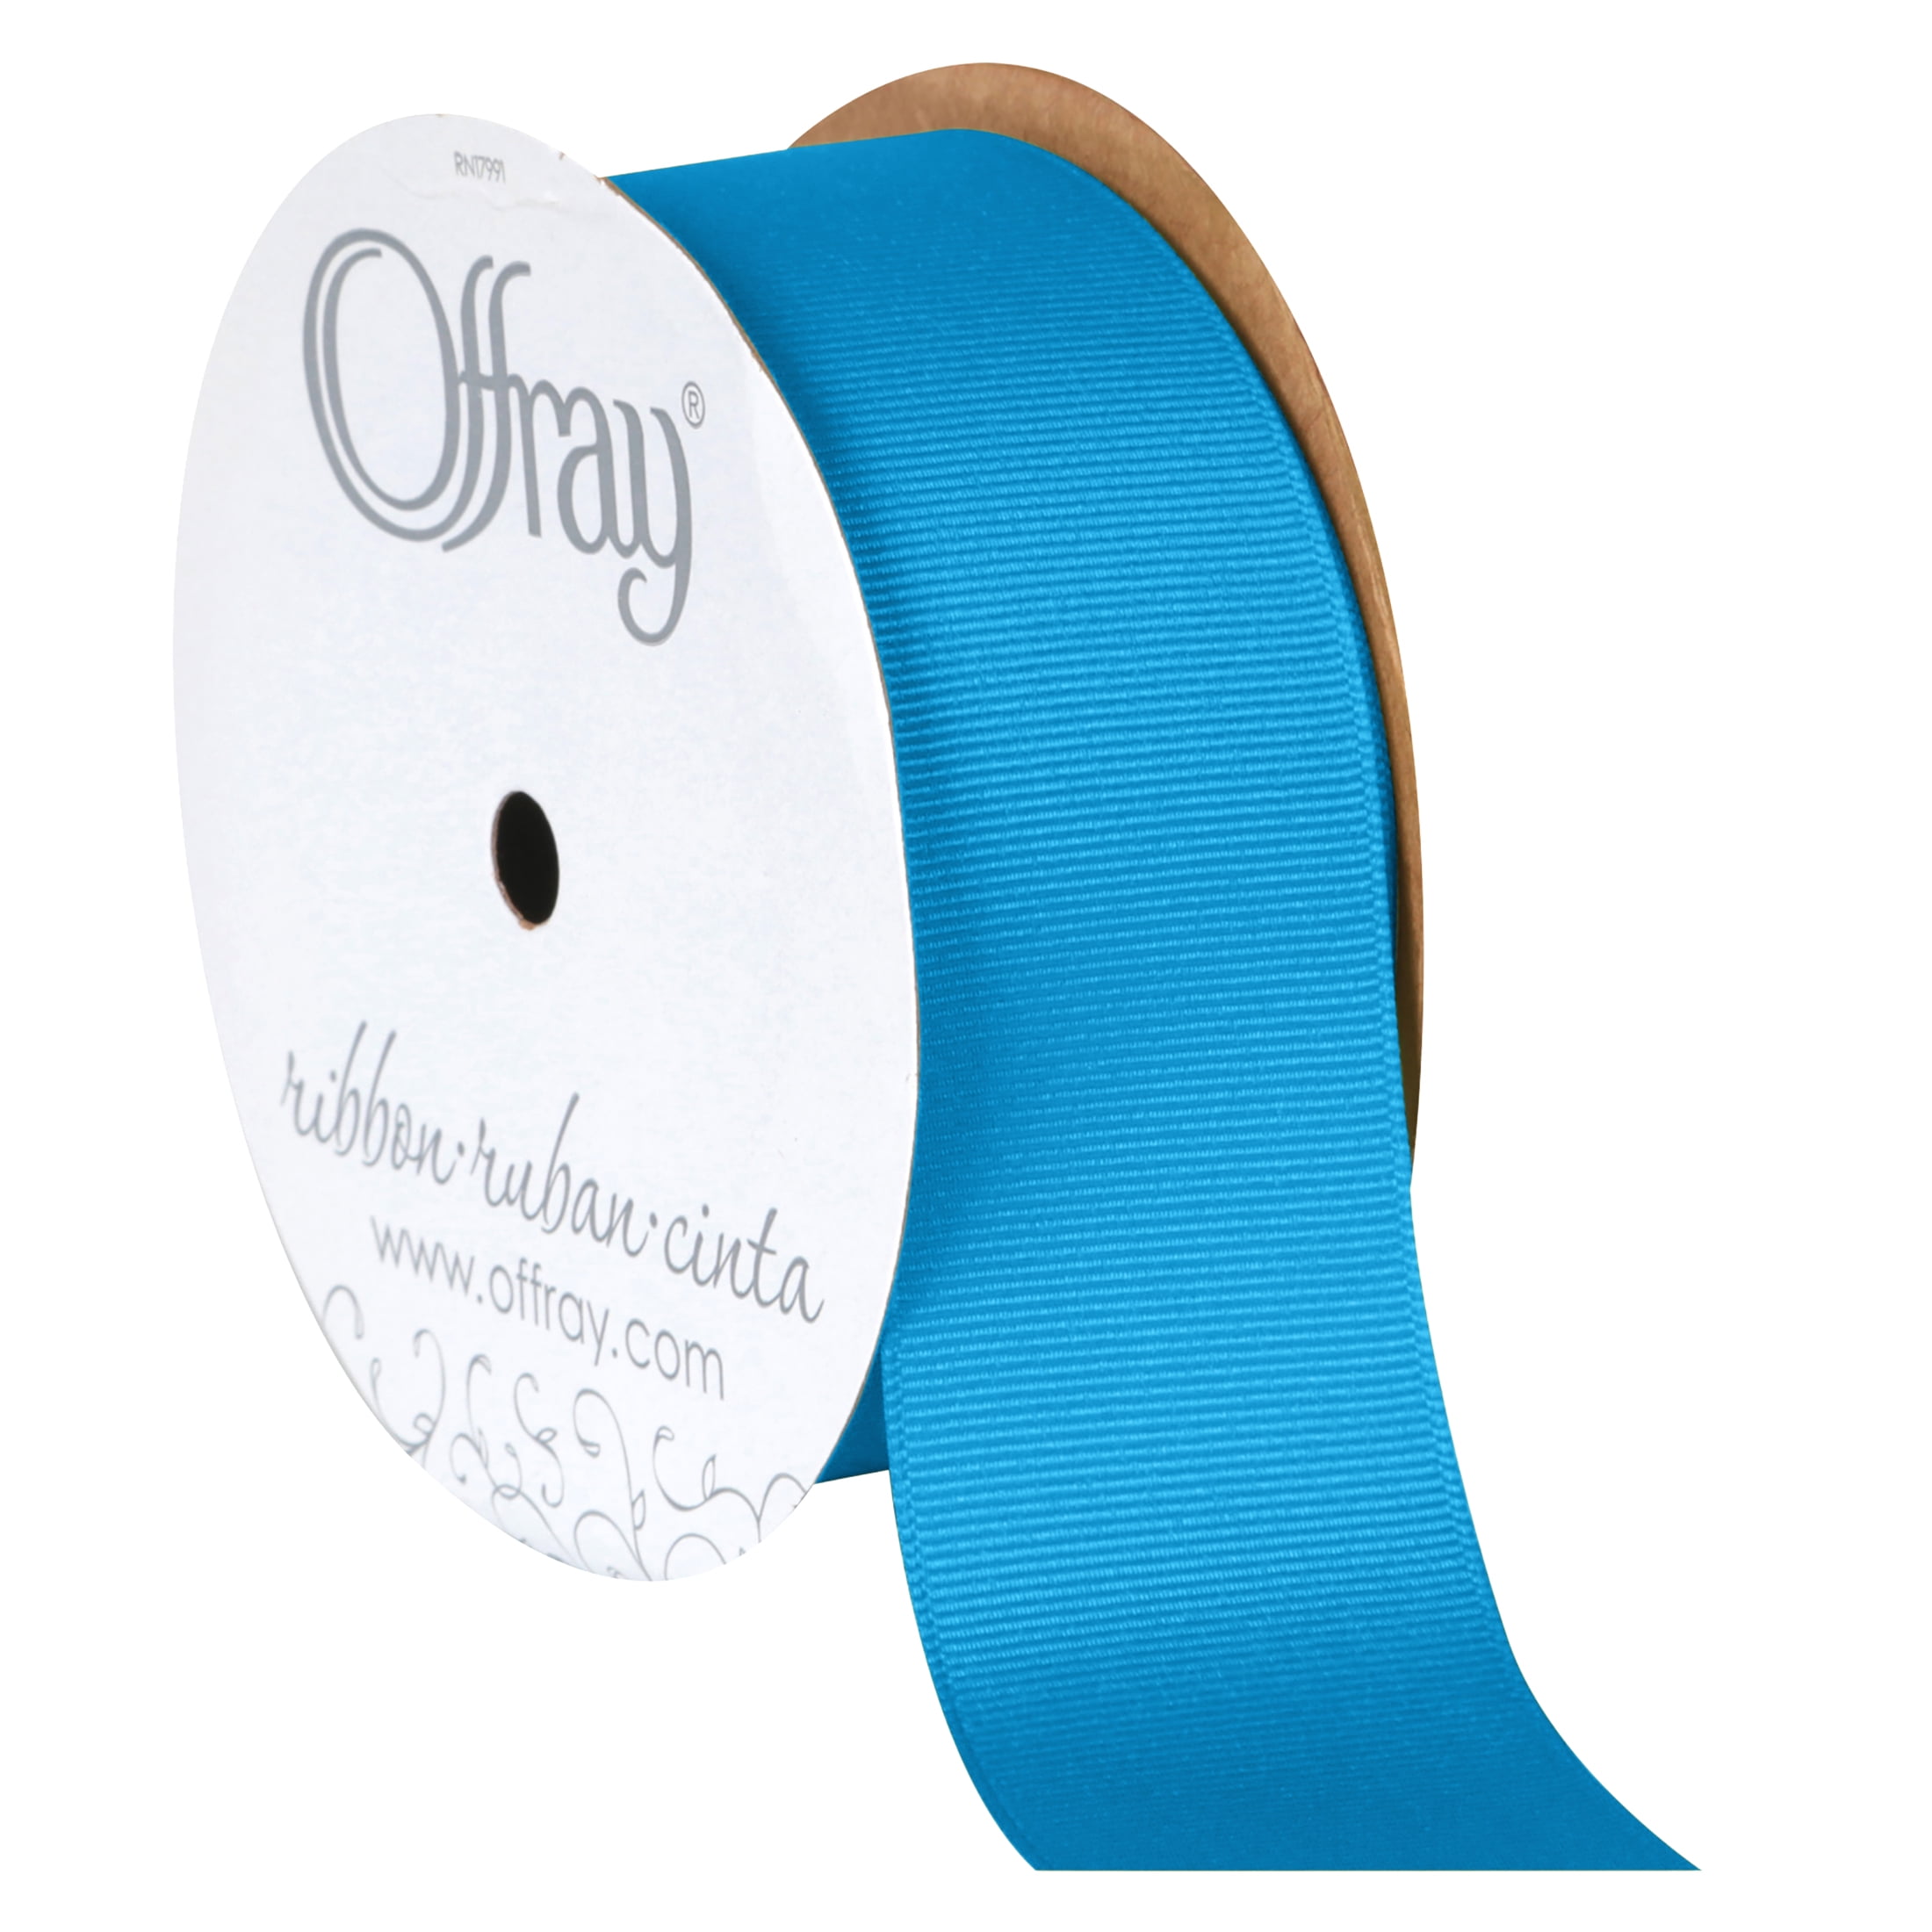 Offray Starry Stripe Craft Ribbon, 1 1/2-Inch x 9-Feet, Blue Star